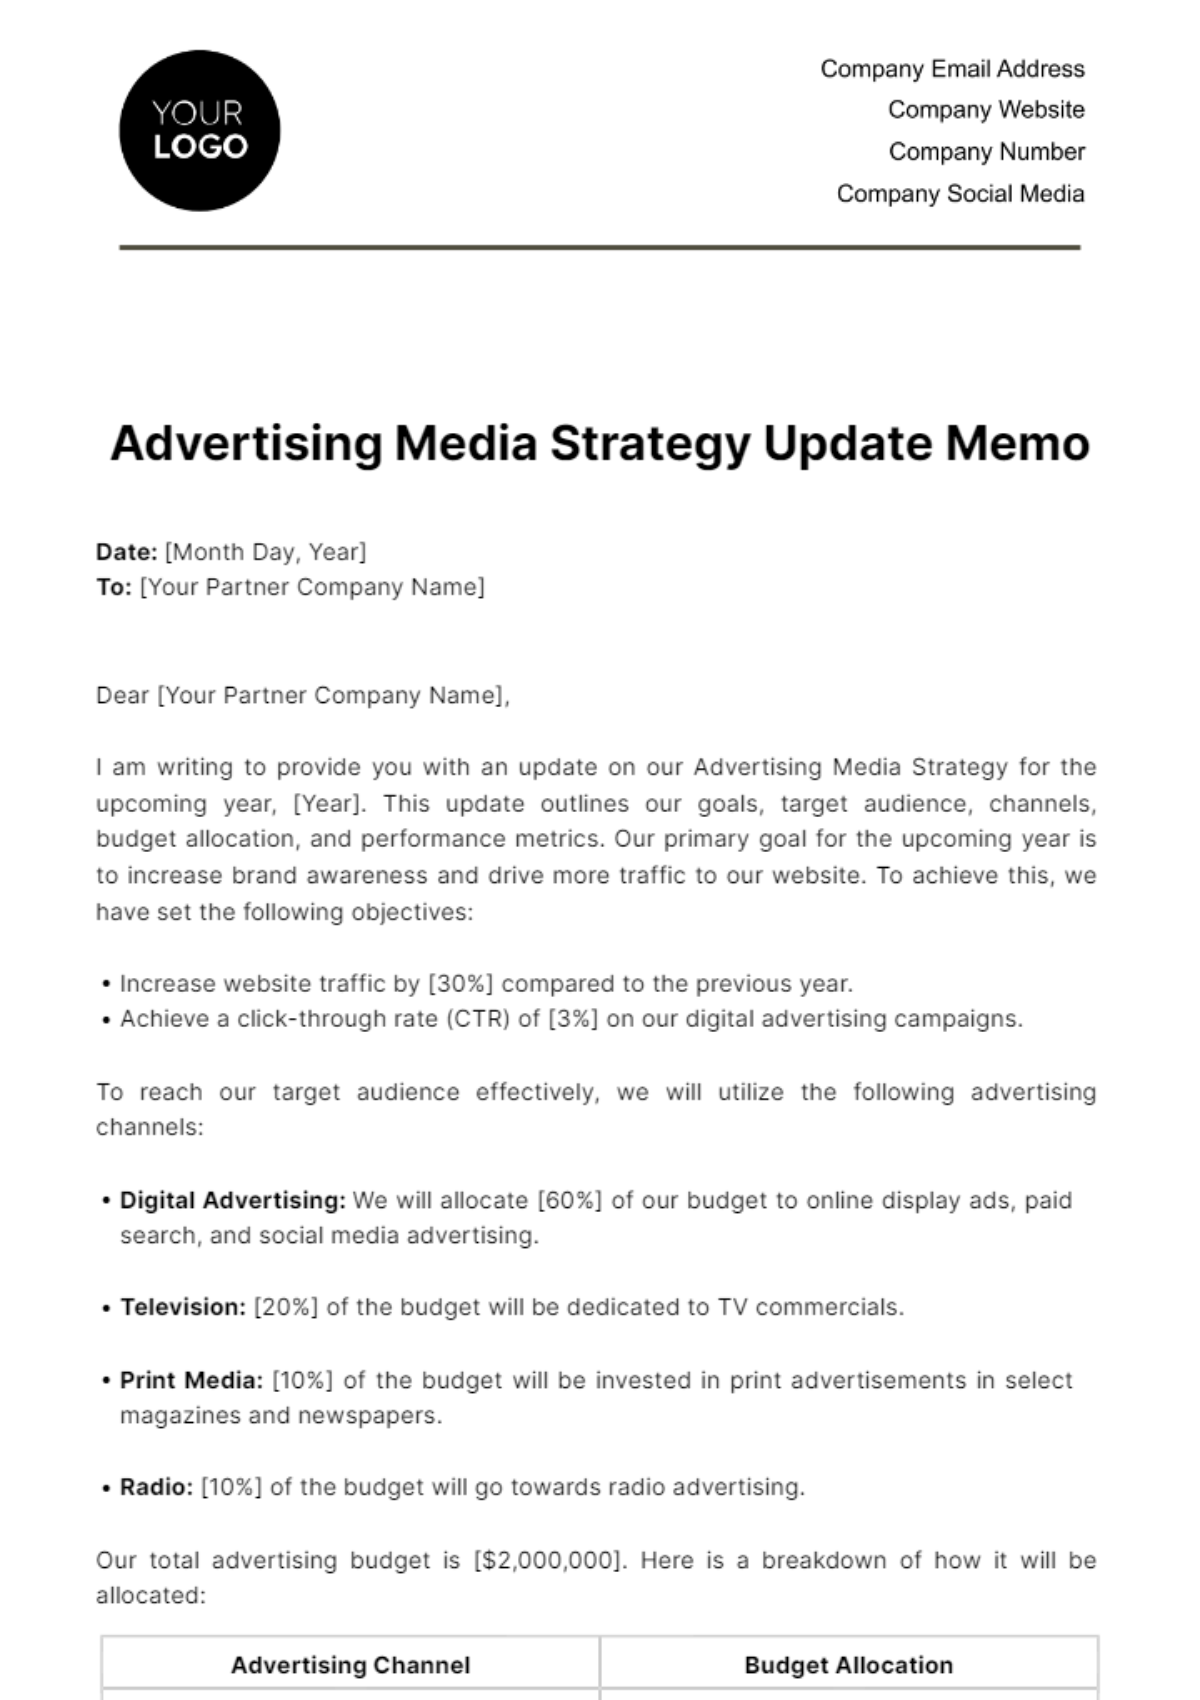 Free Advertising Media Strategy Update Memo Template